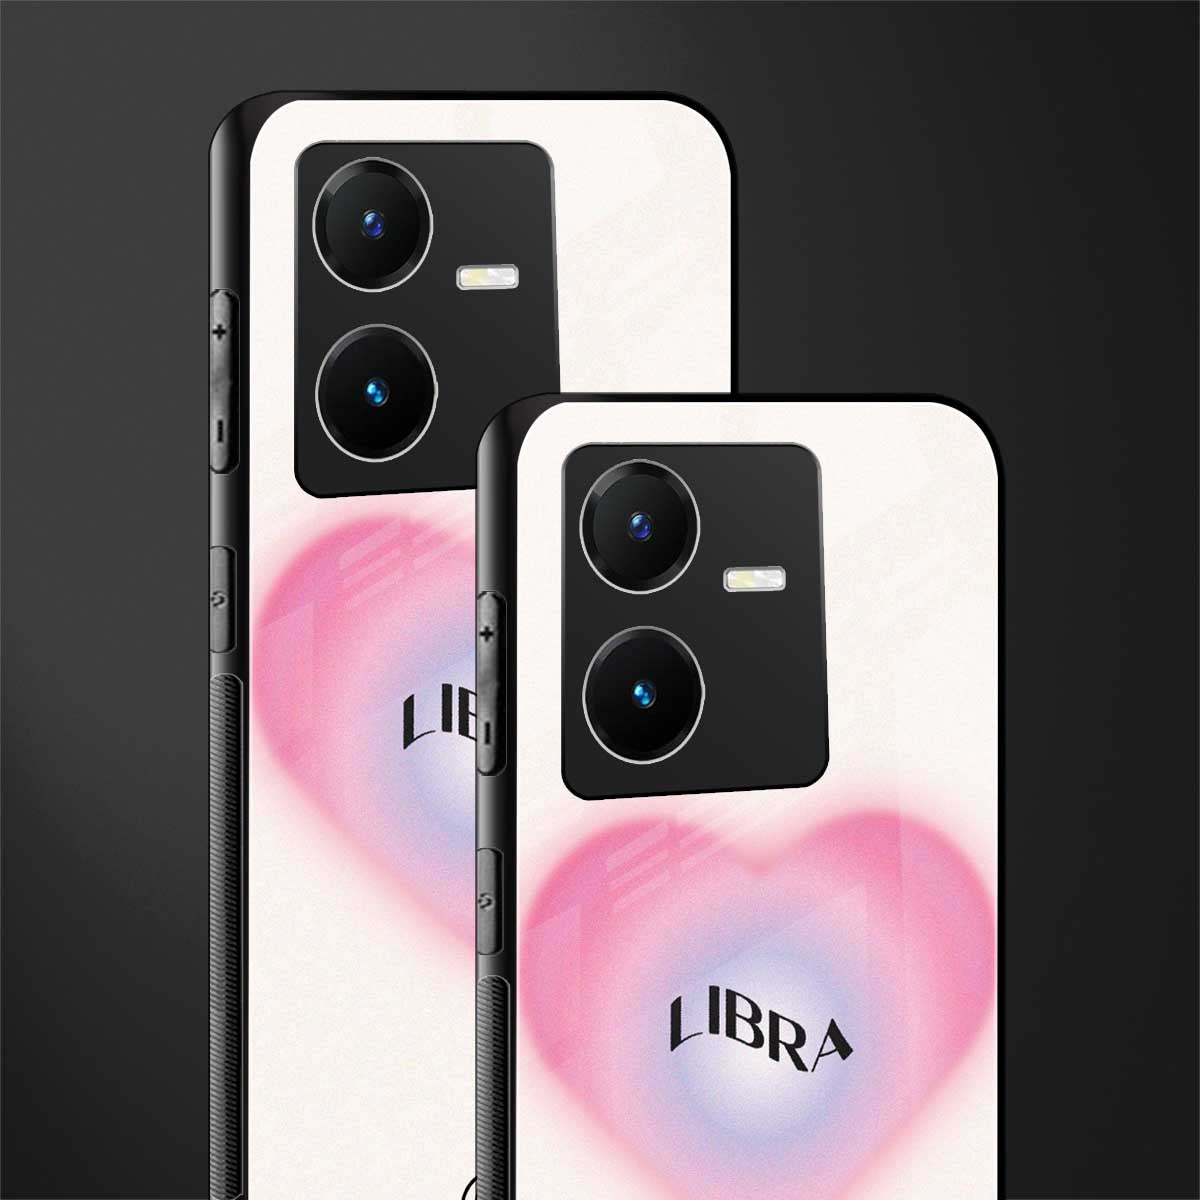 libra minimalistic back phone cover | glass case for vivo y22